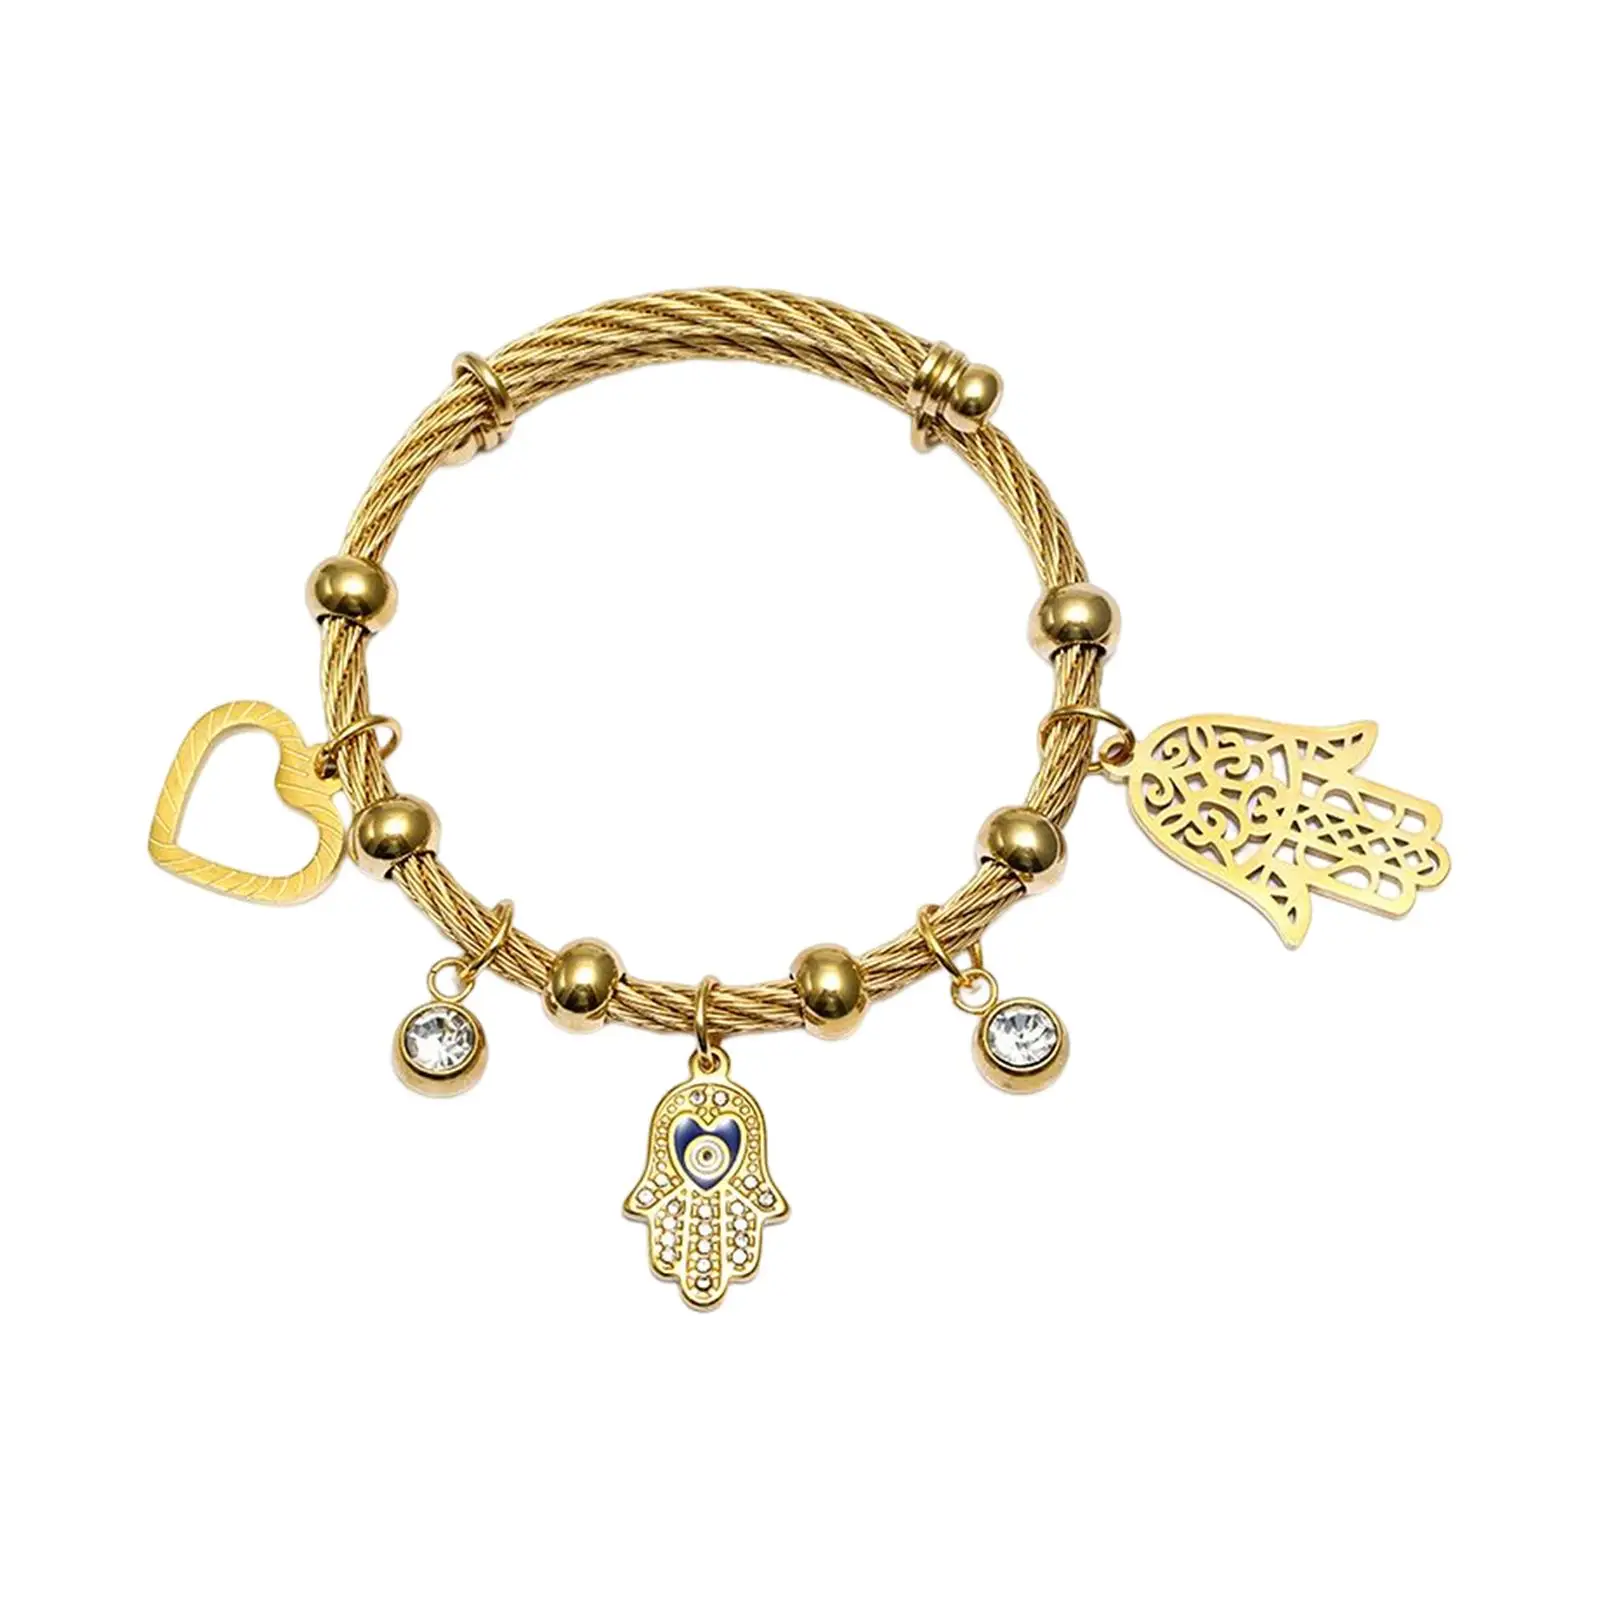 Chic Hamsa Hand of Fatima Bracelet Adjustable Bangle Love Heart Charm Pendant Bracelet for Women Mom Teen Birthday Gift Jewelry